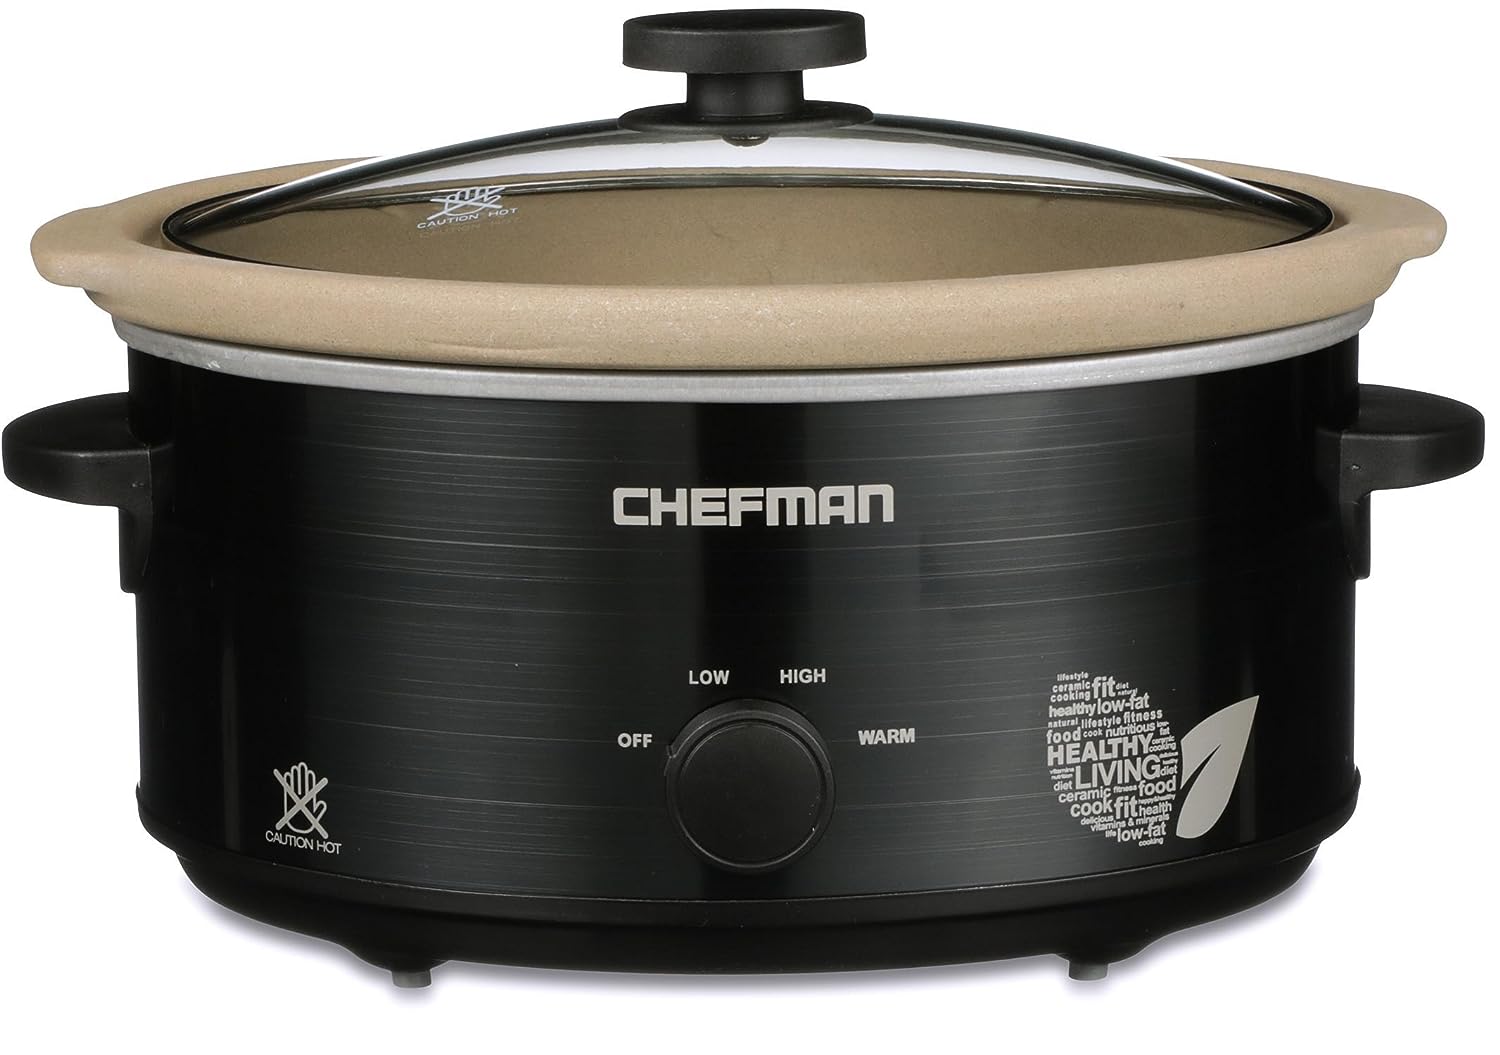 Chefman 6-Quart Stainless Steel Programmable Pressure Cooker